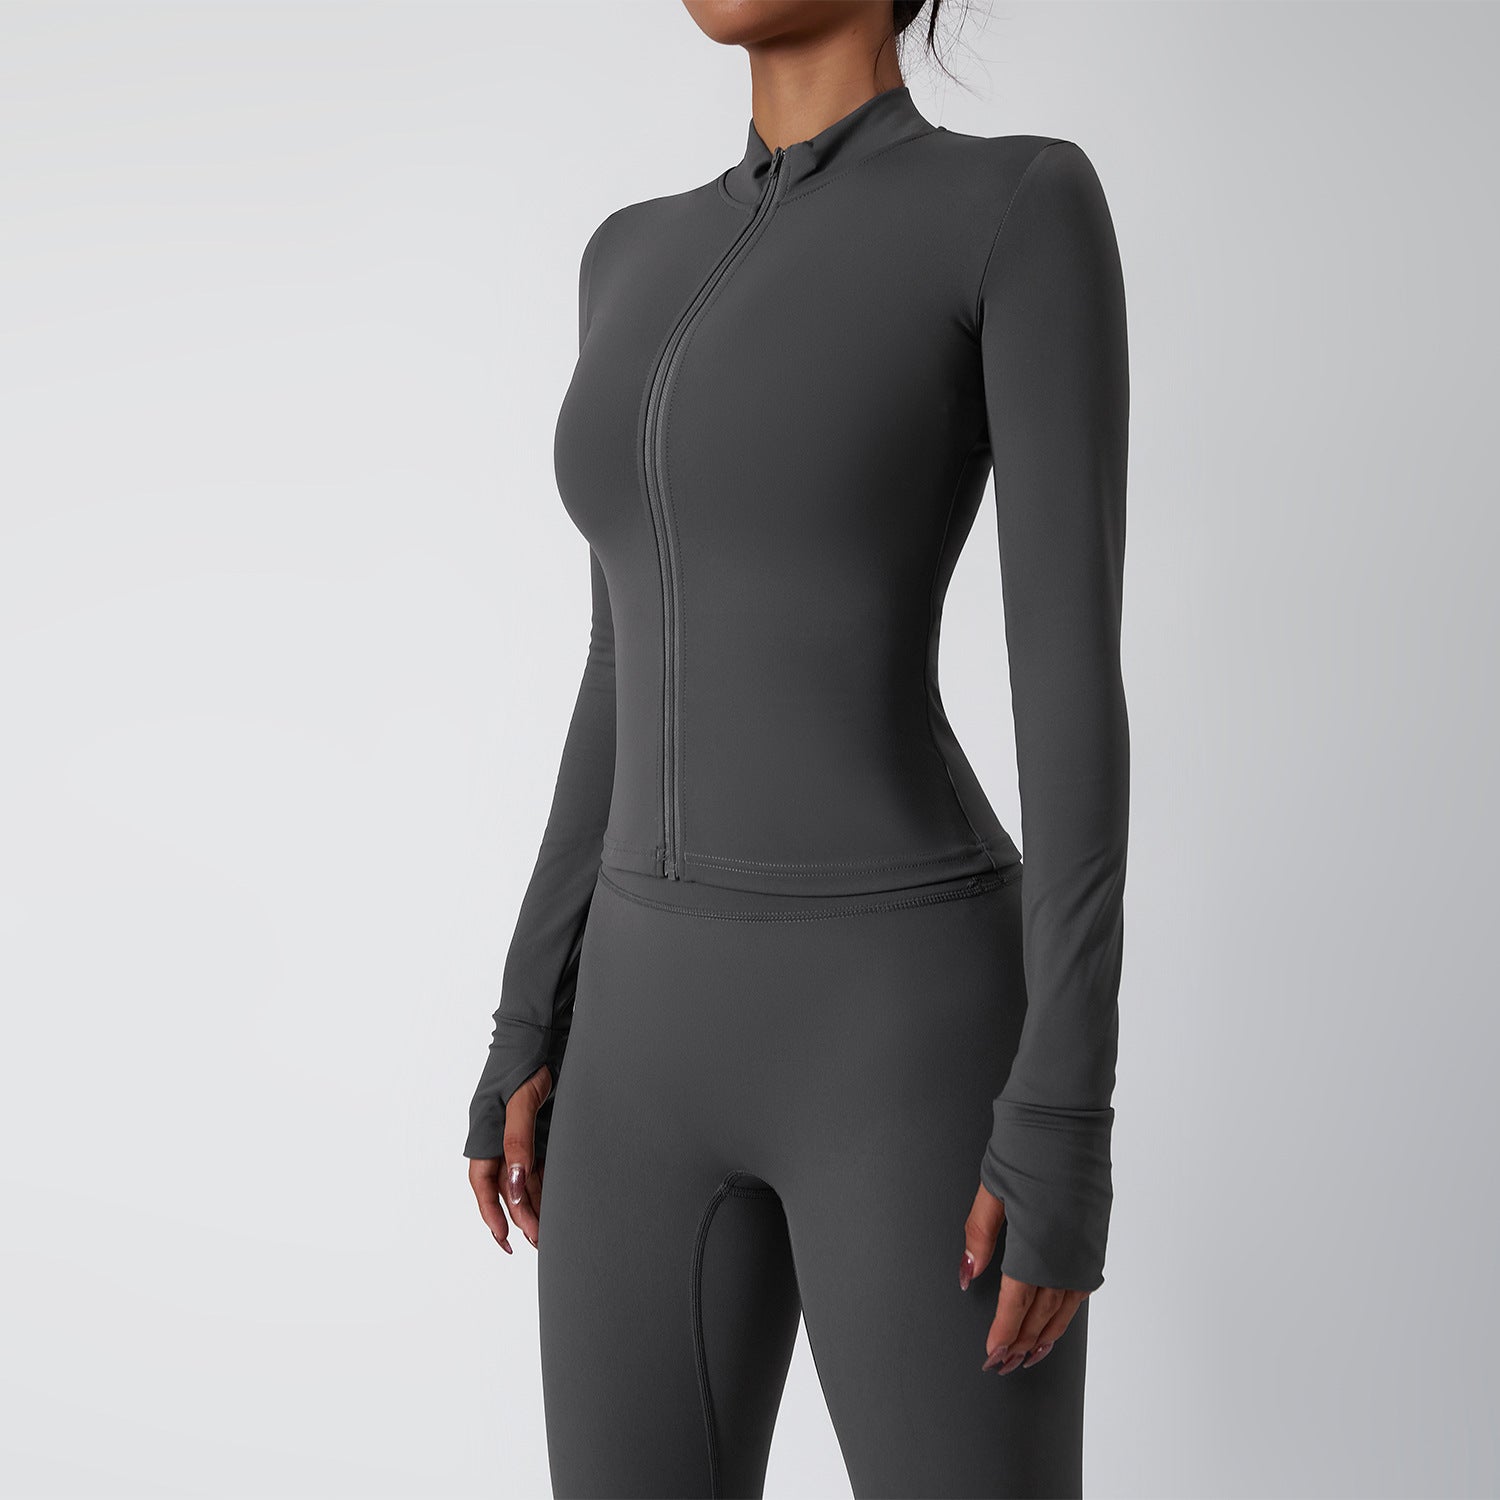 Women's zipper long-sleeved fitness long set